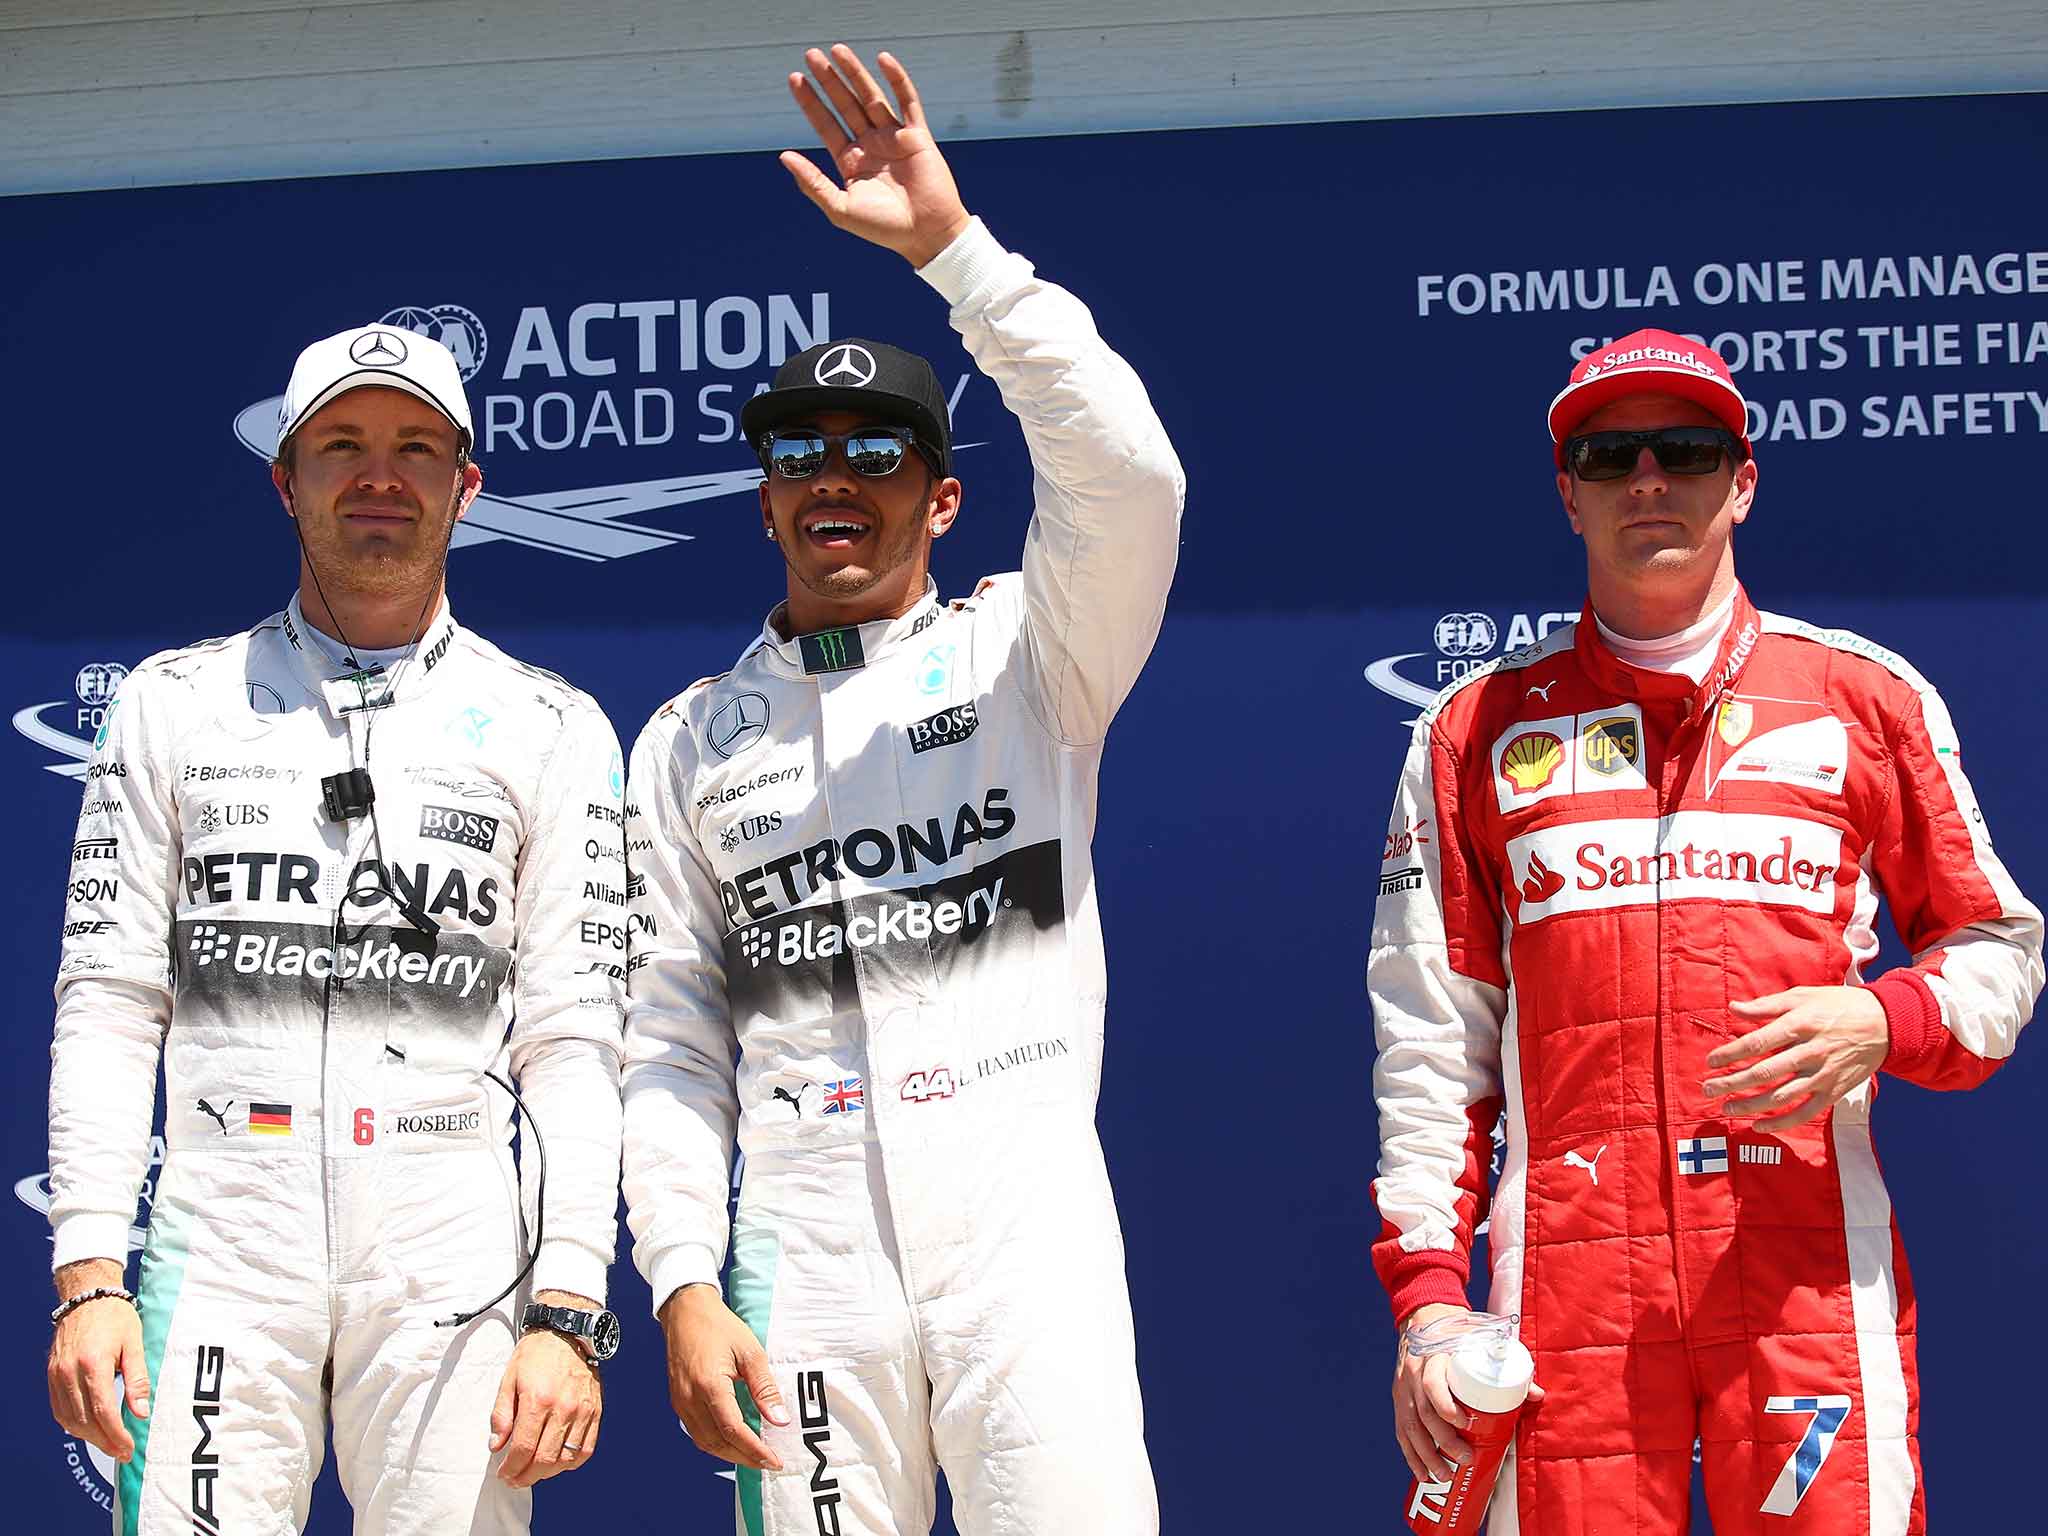 Lewis Hamilton celebrates pole position alongside Nico Rosberg (L) and Kimi Raikkonen (R)